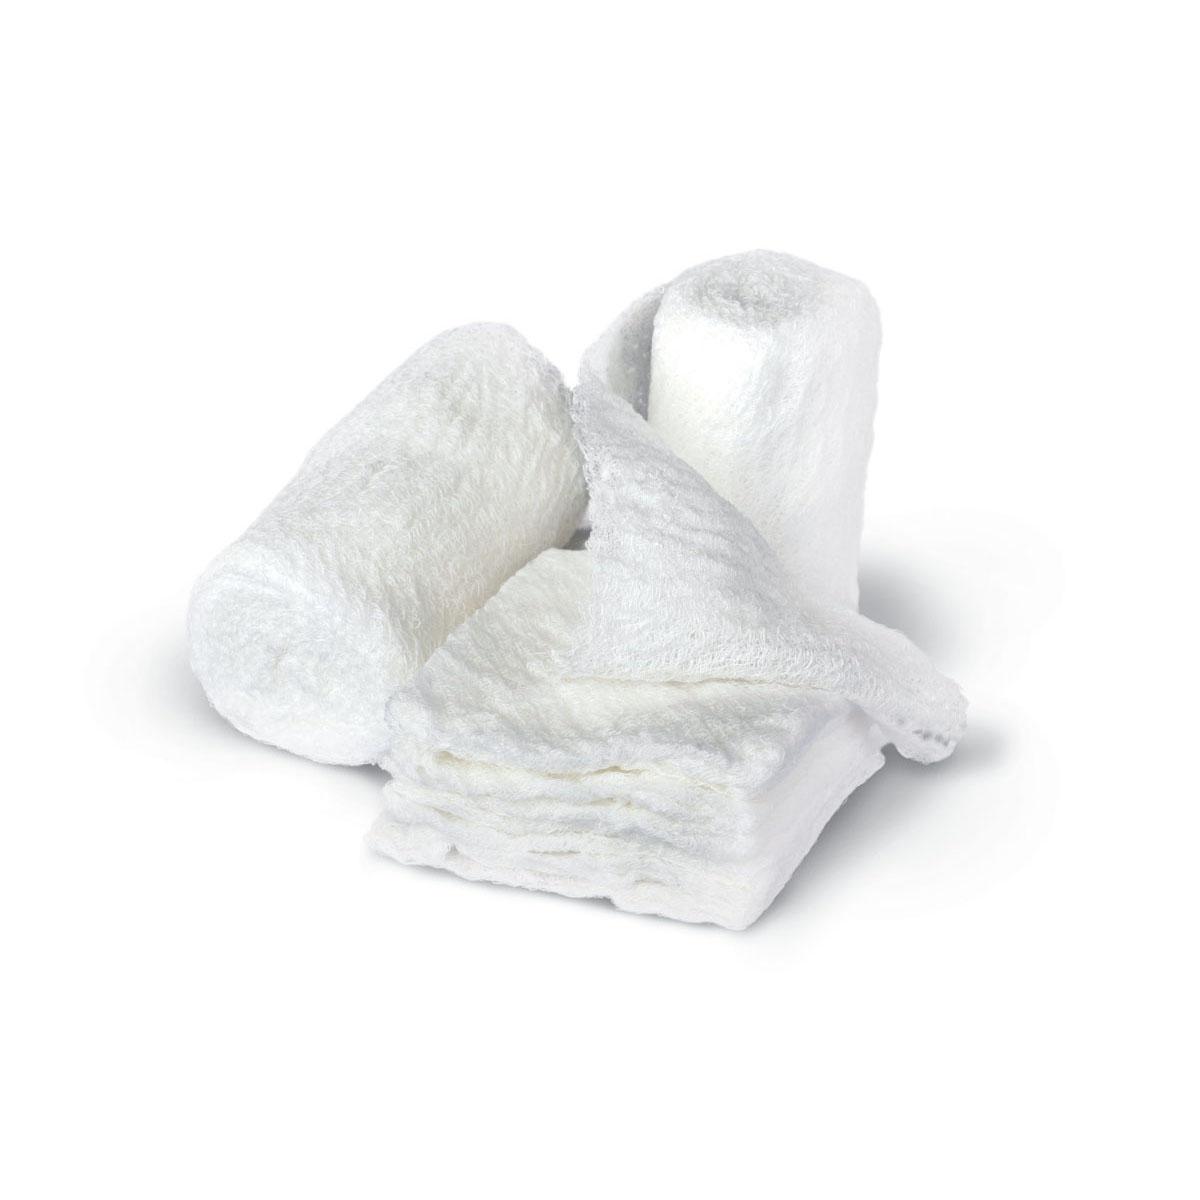 Bulkee II Nonsterile Cotton Gauze Bandages Case of 100